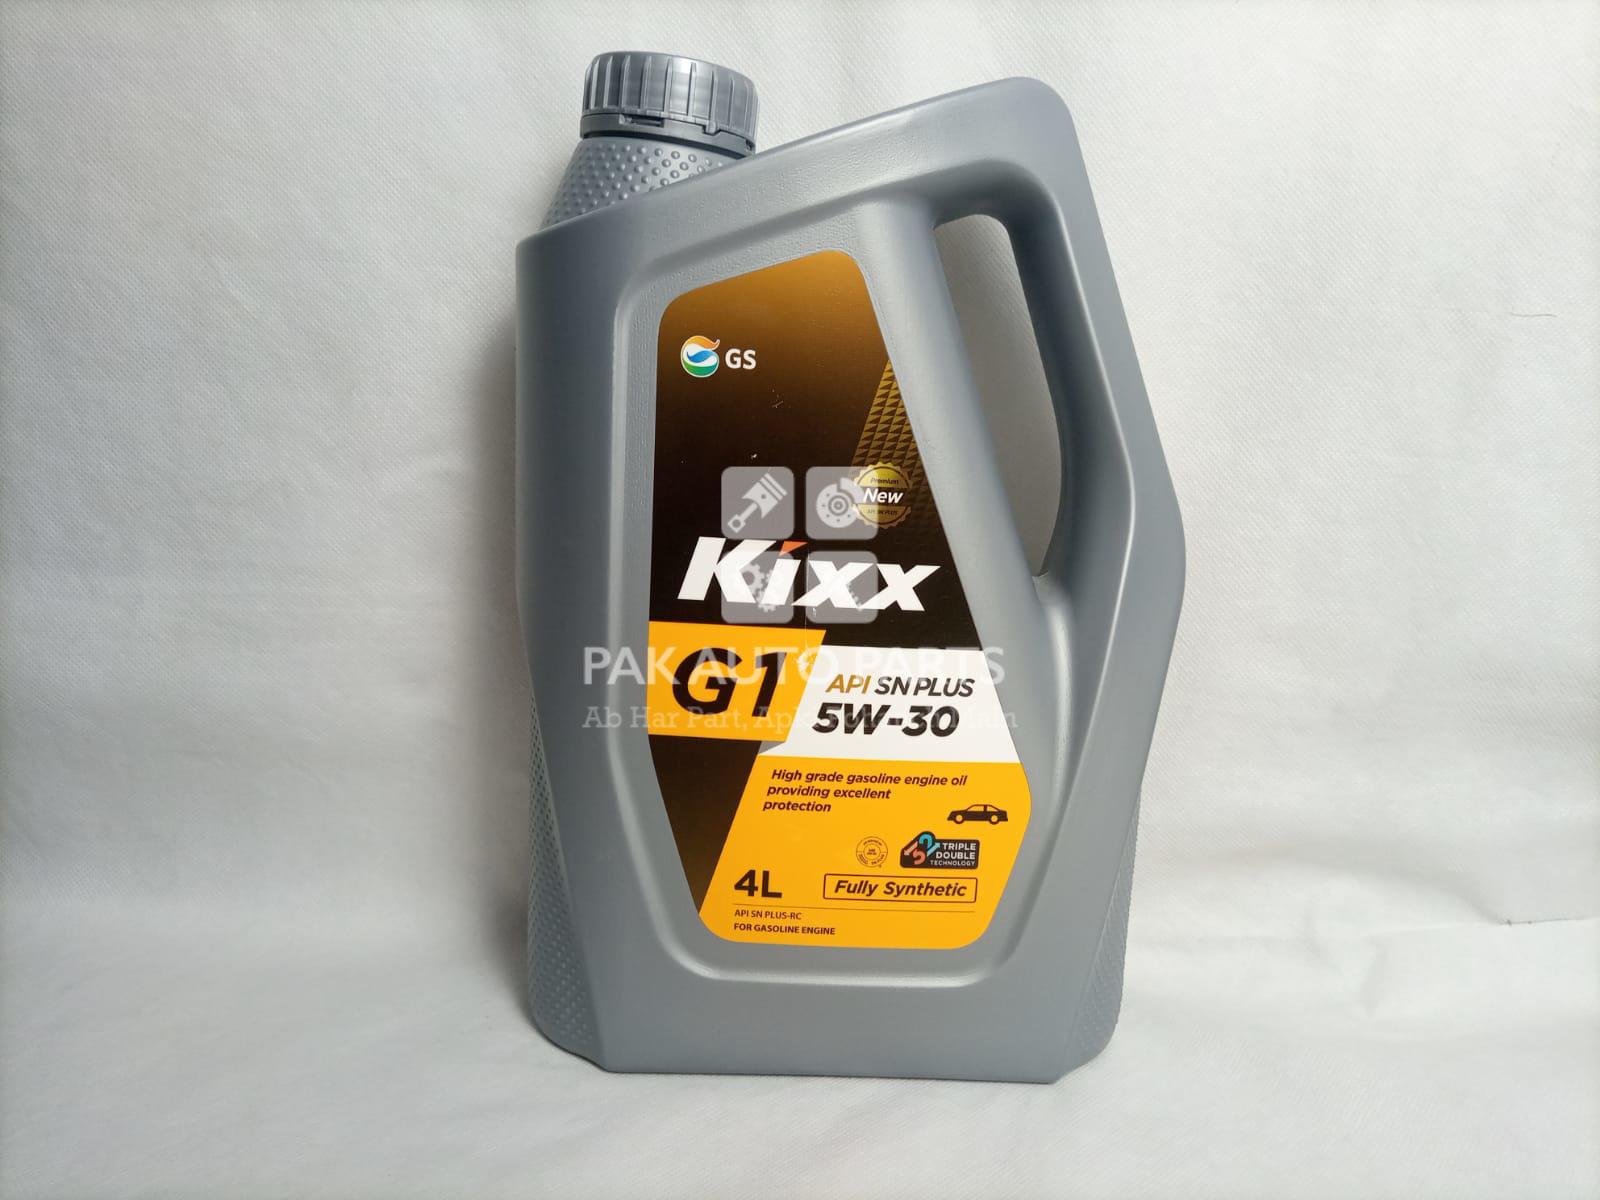 Kixx G1 API SN PLUS 5W-30 (4L) High grade gasoline engine oil providing .